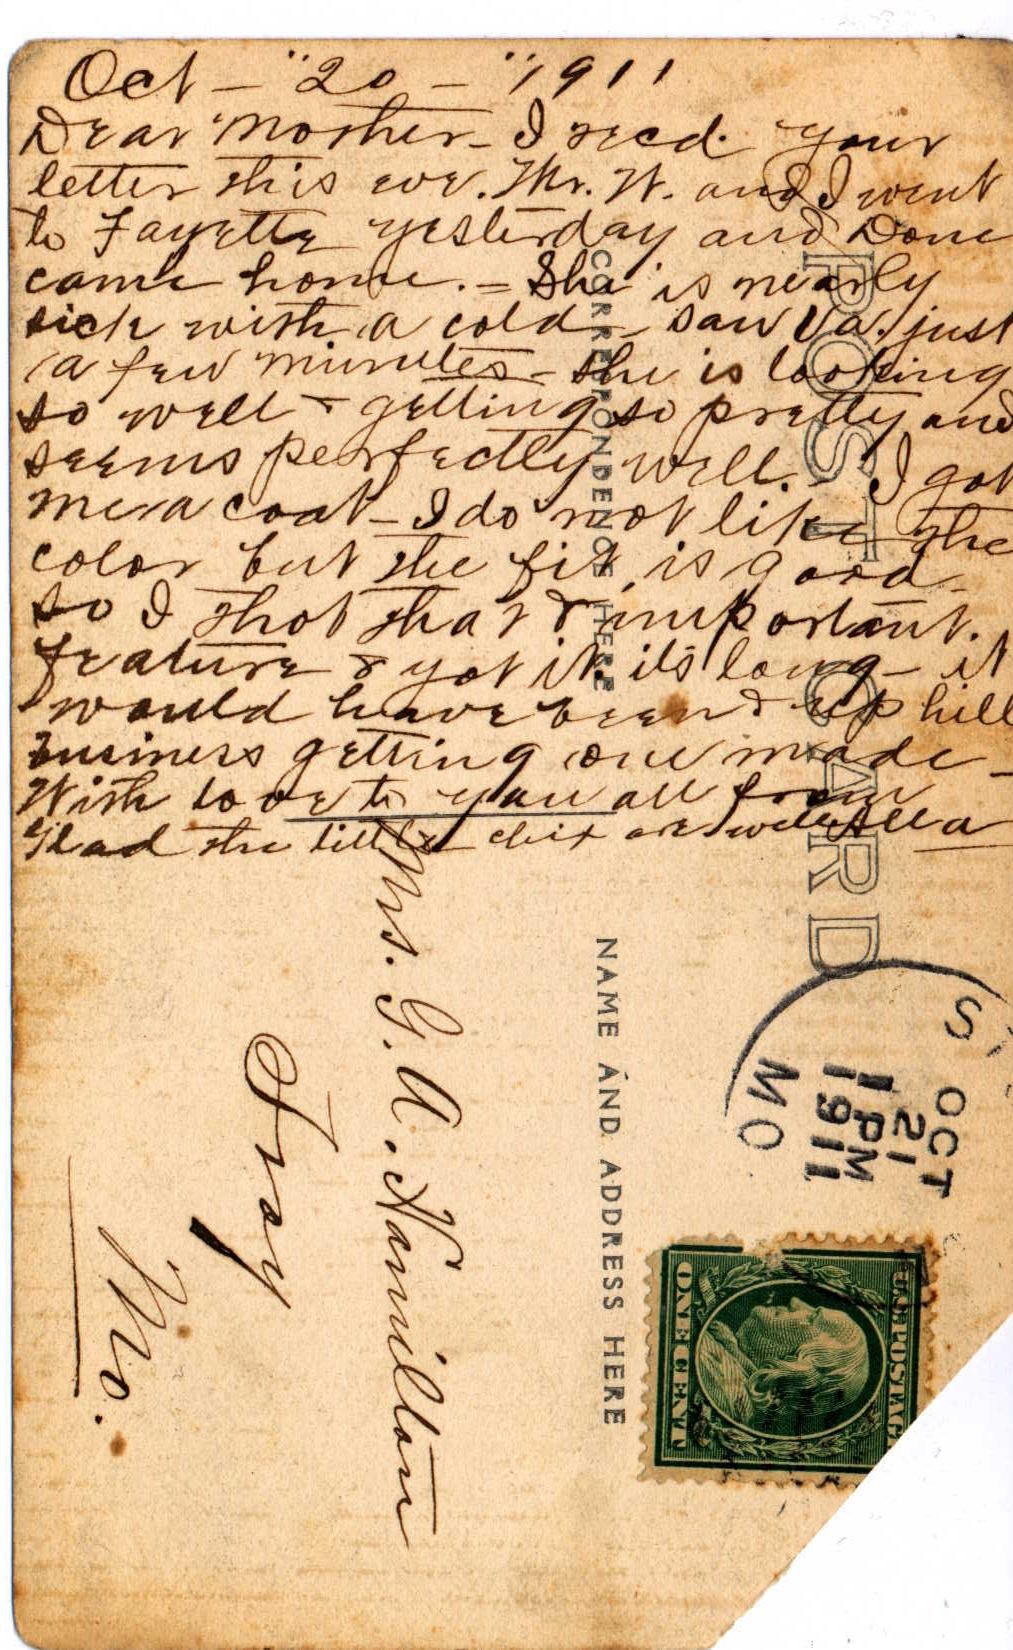 Hamilton-Postcard-1911-side2.JPG (317642 bytes)